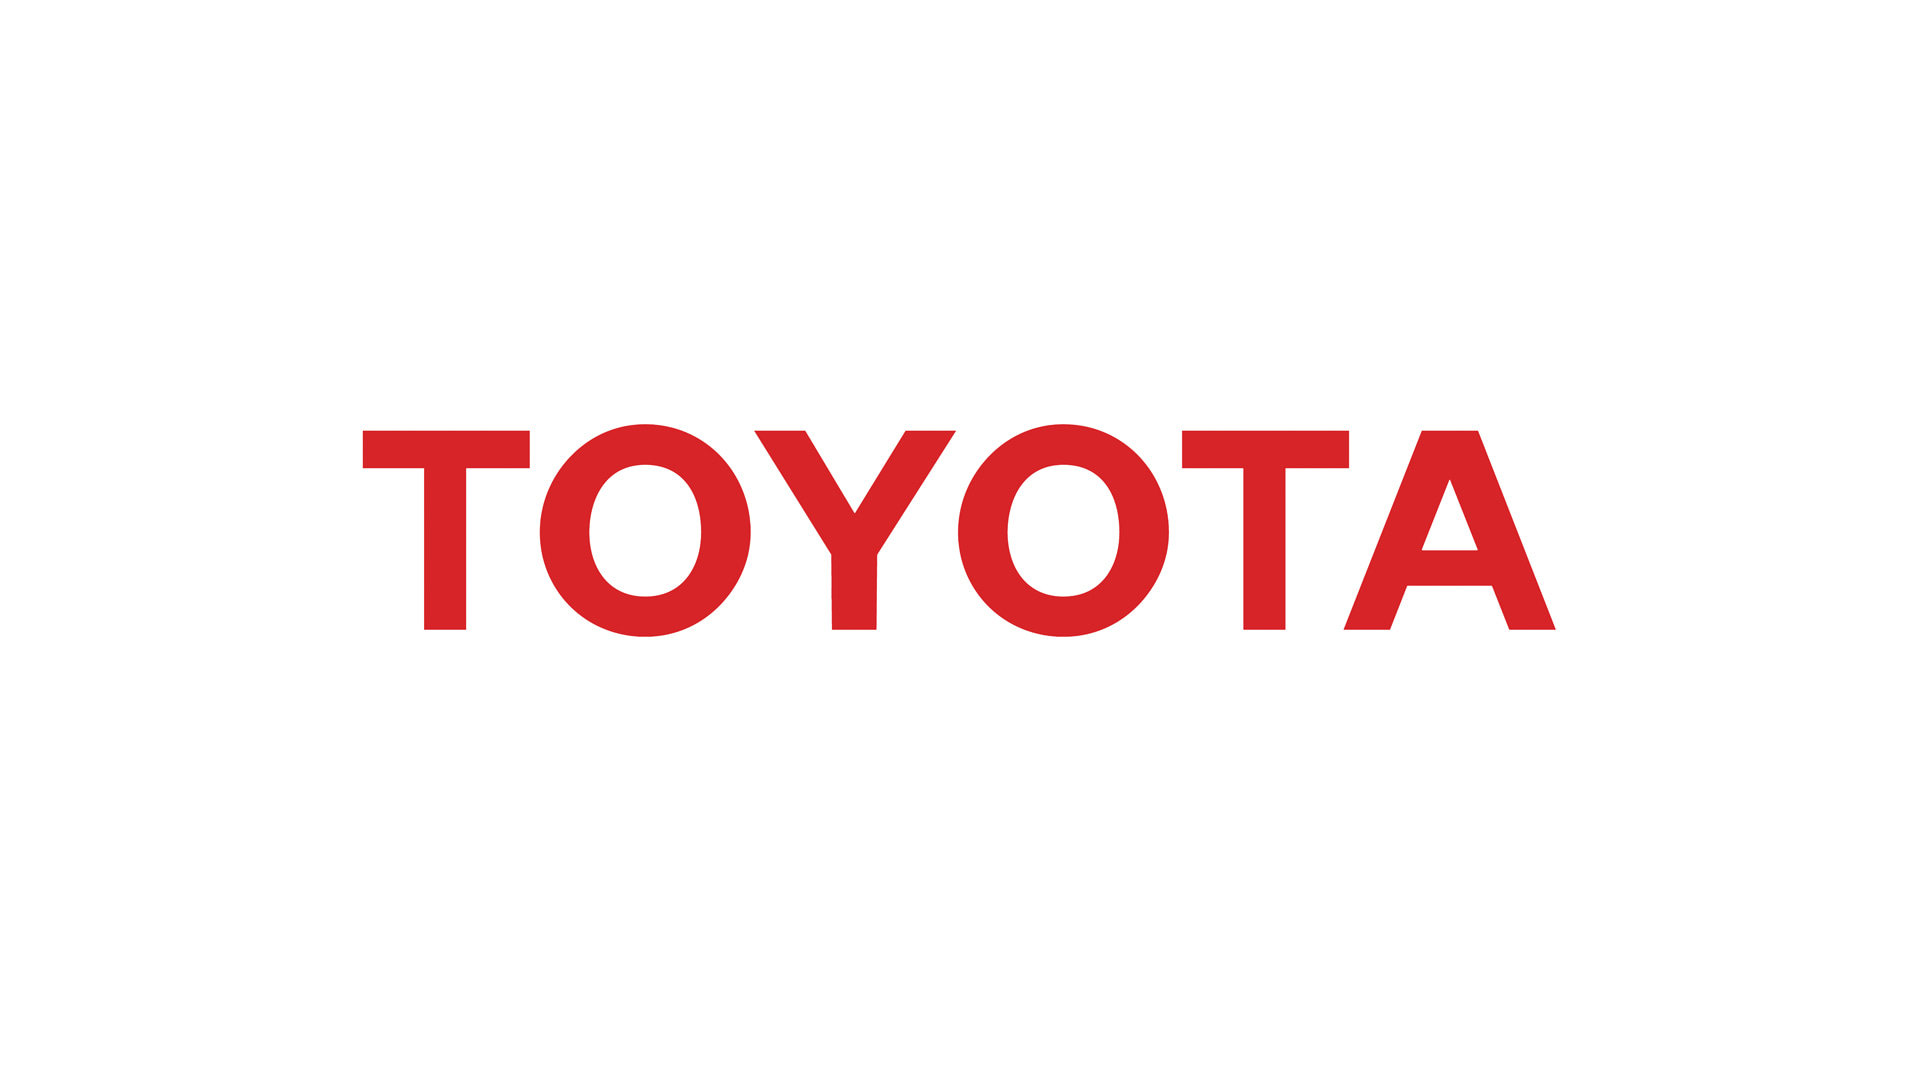 Toyota corporate logo